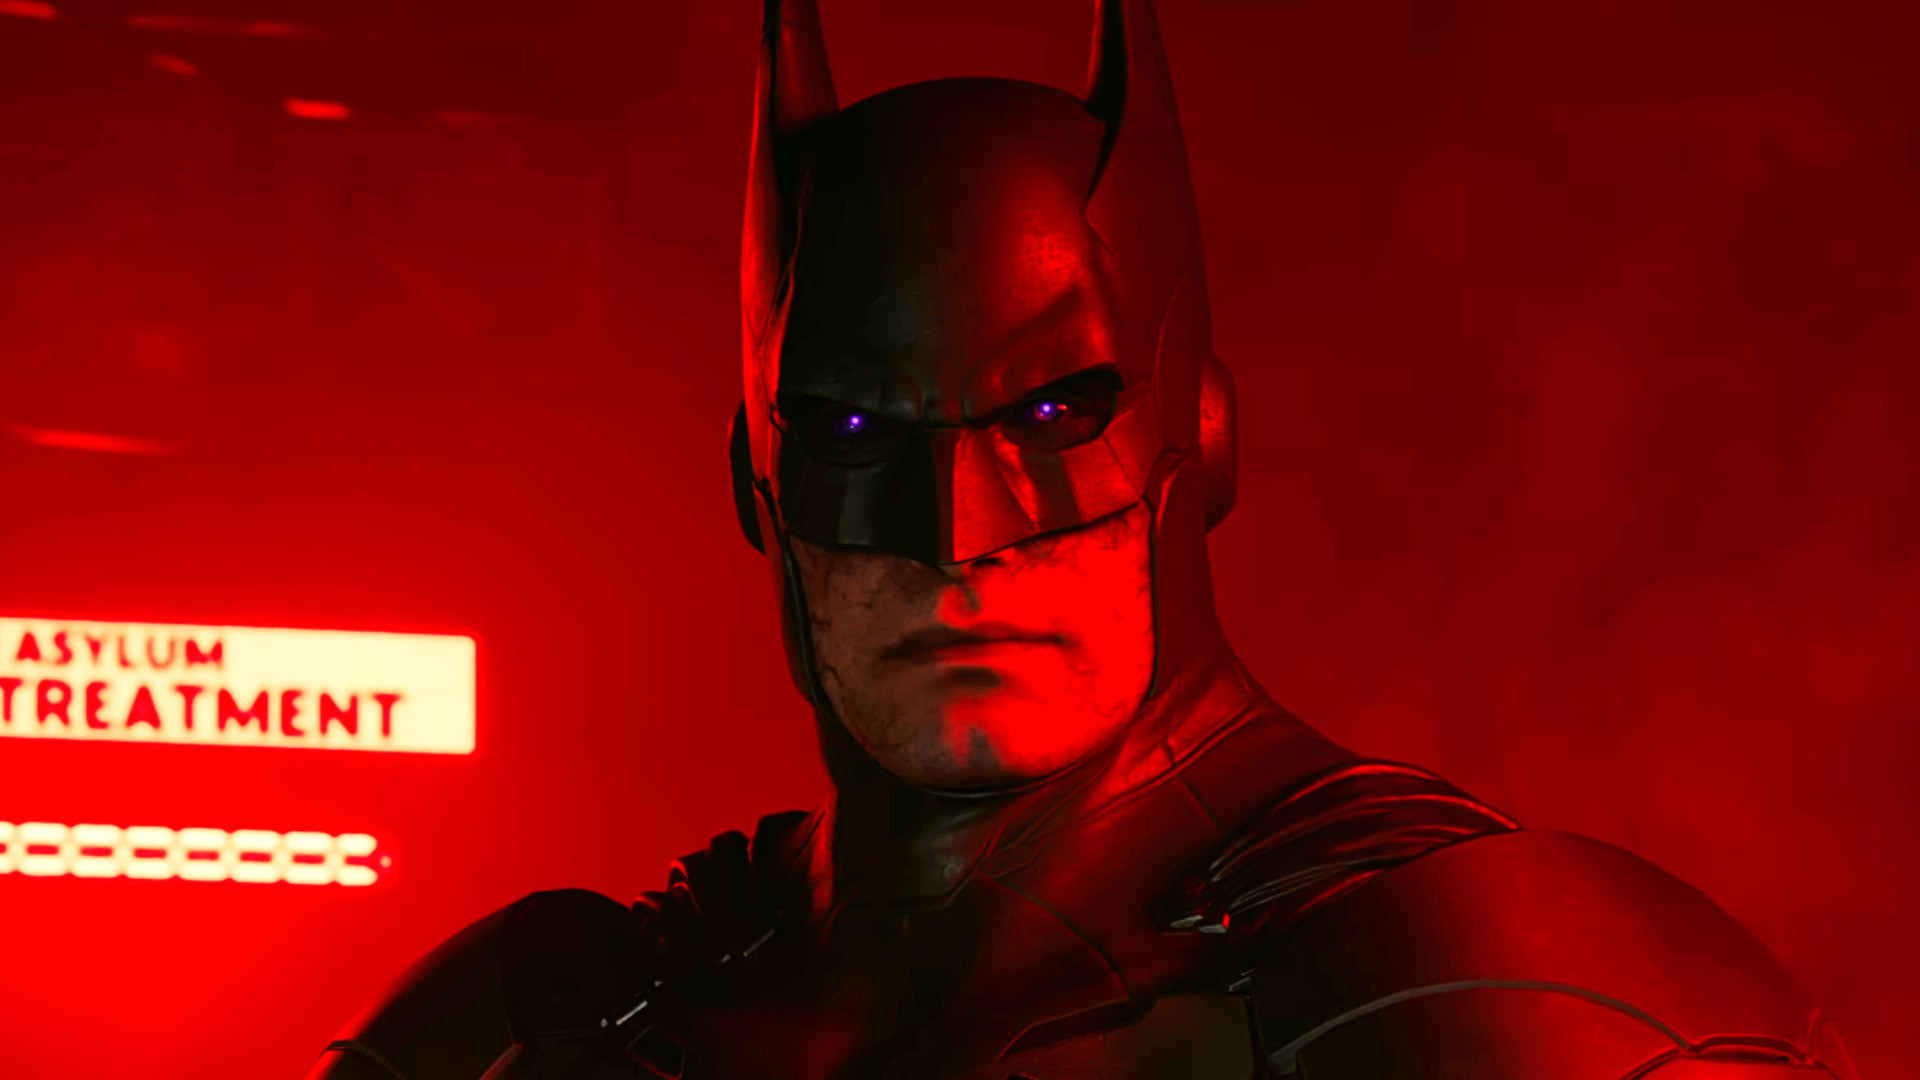 Suicide Squad release date trailer shows Kevin Conroy's Batman | PCGamesN